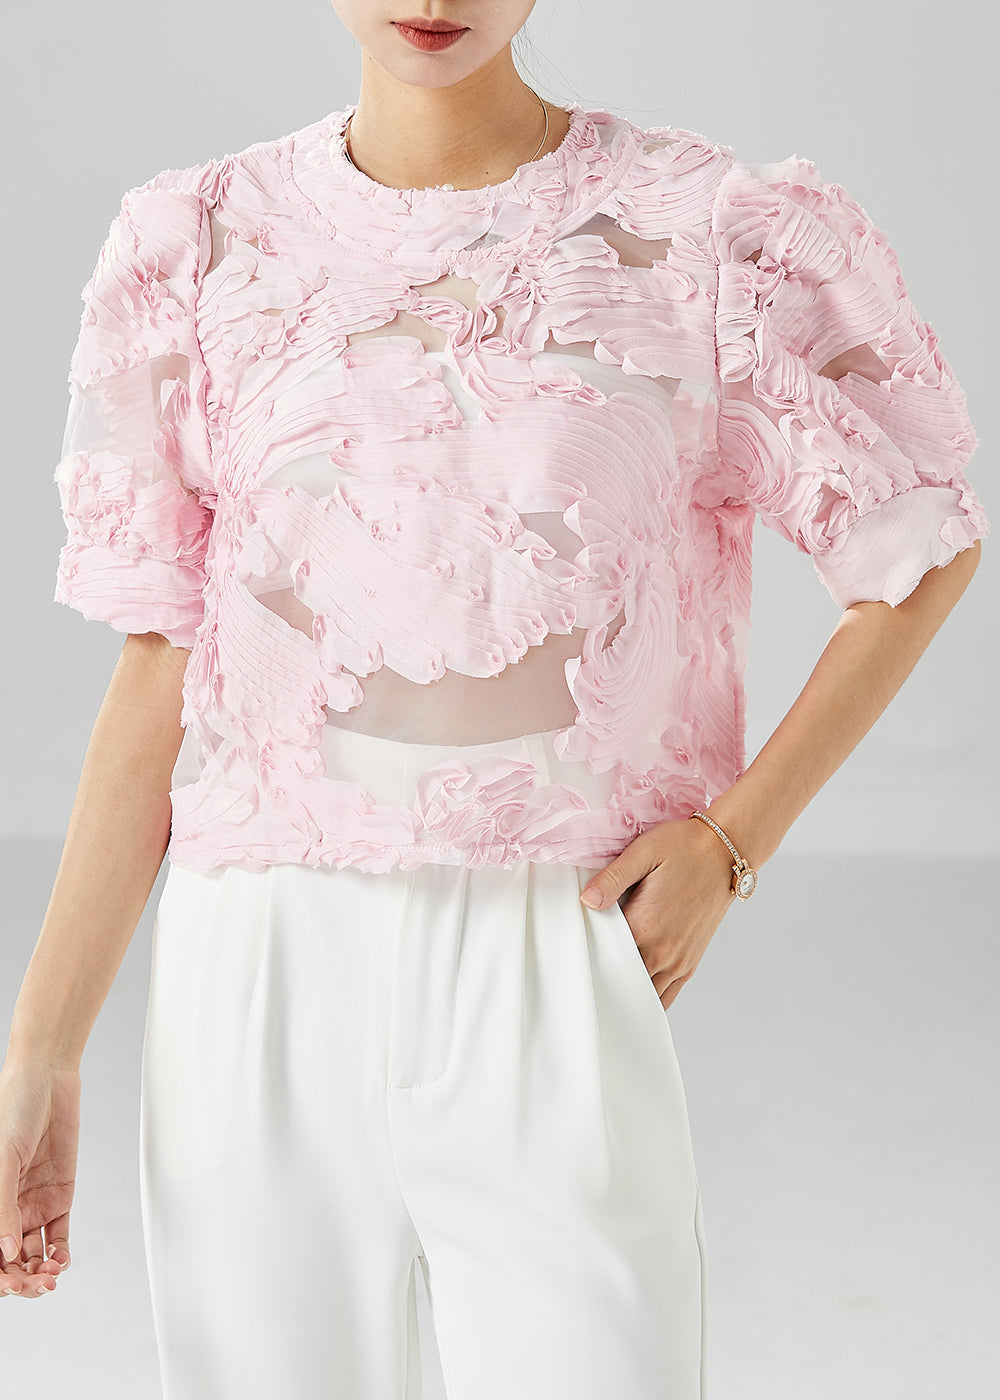 Pink Original Design Tulle Shirts Wrinkled Summer LY6140 - fabuloryshop